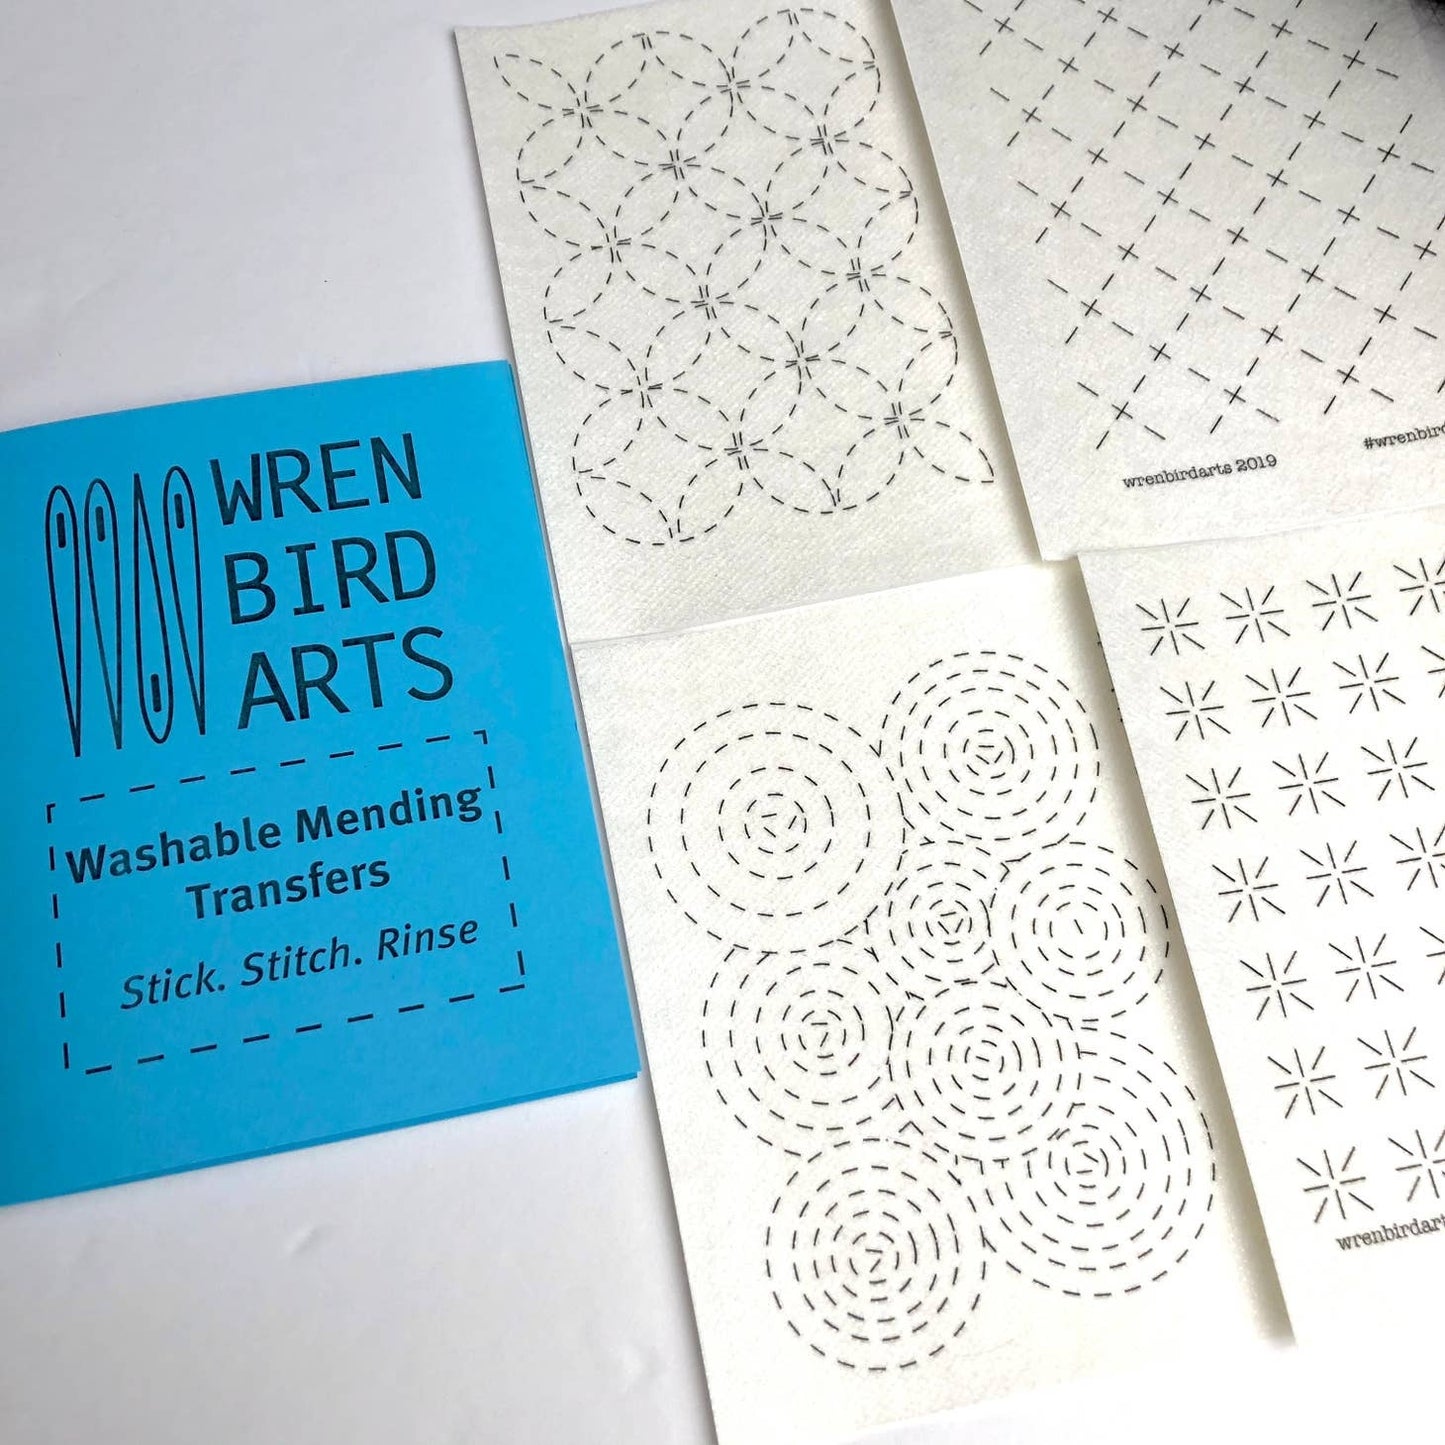 WrenBirdArts Embroidery Transfers